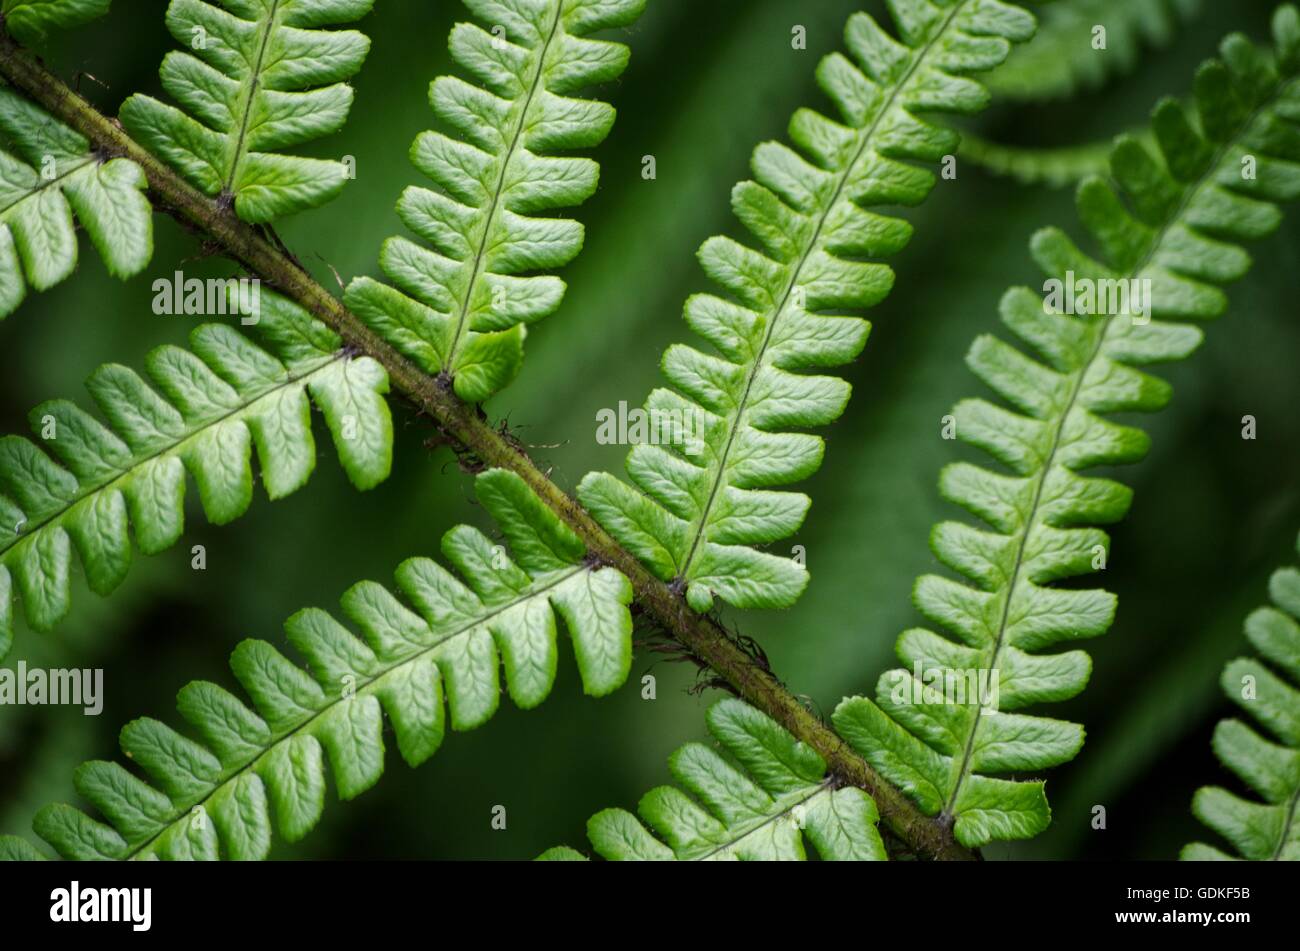 Bracken fern close up. Comox Valley, BC, Canada Stock Photo